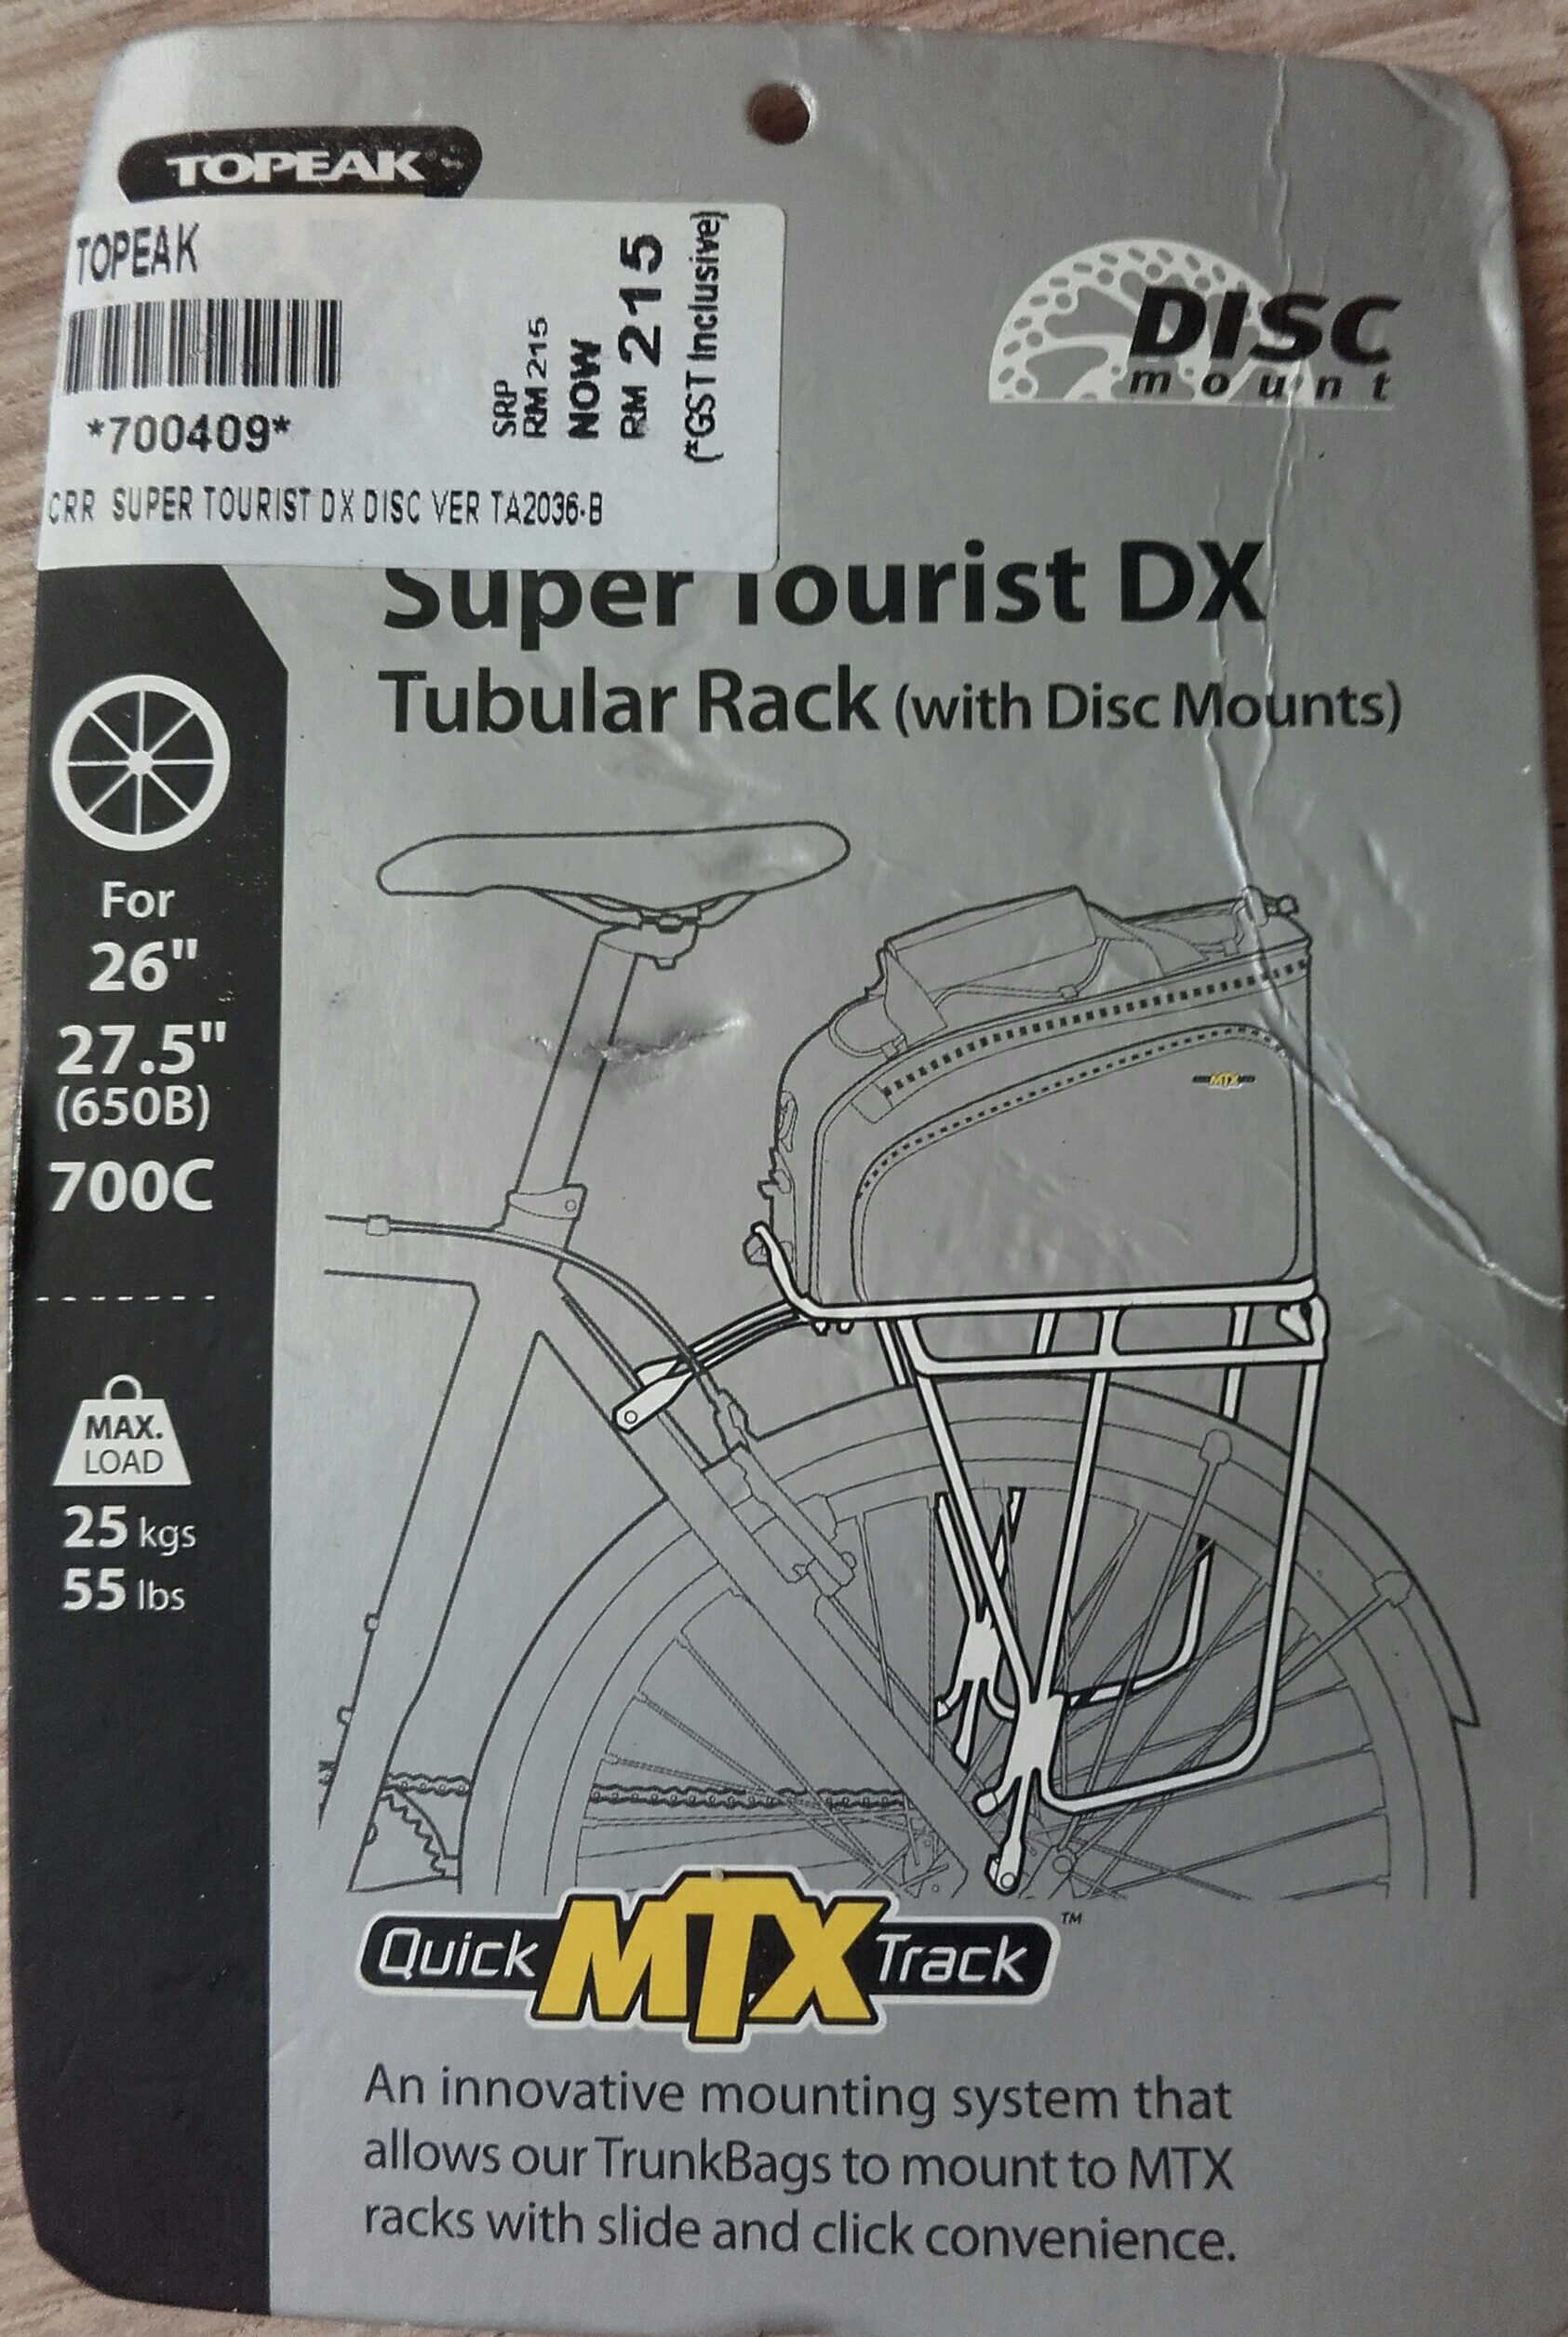 Super Tourist DX Tubular Rack (with Disc Mounts) - Product - fr